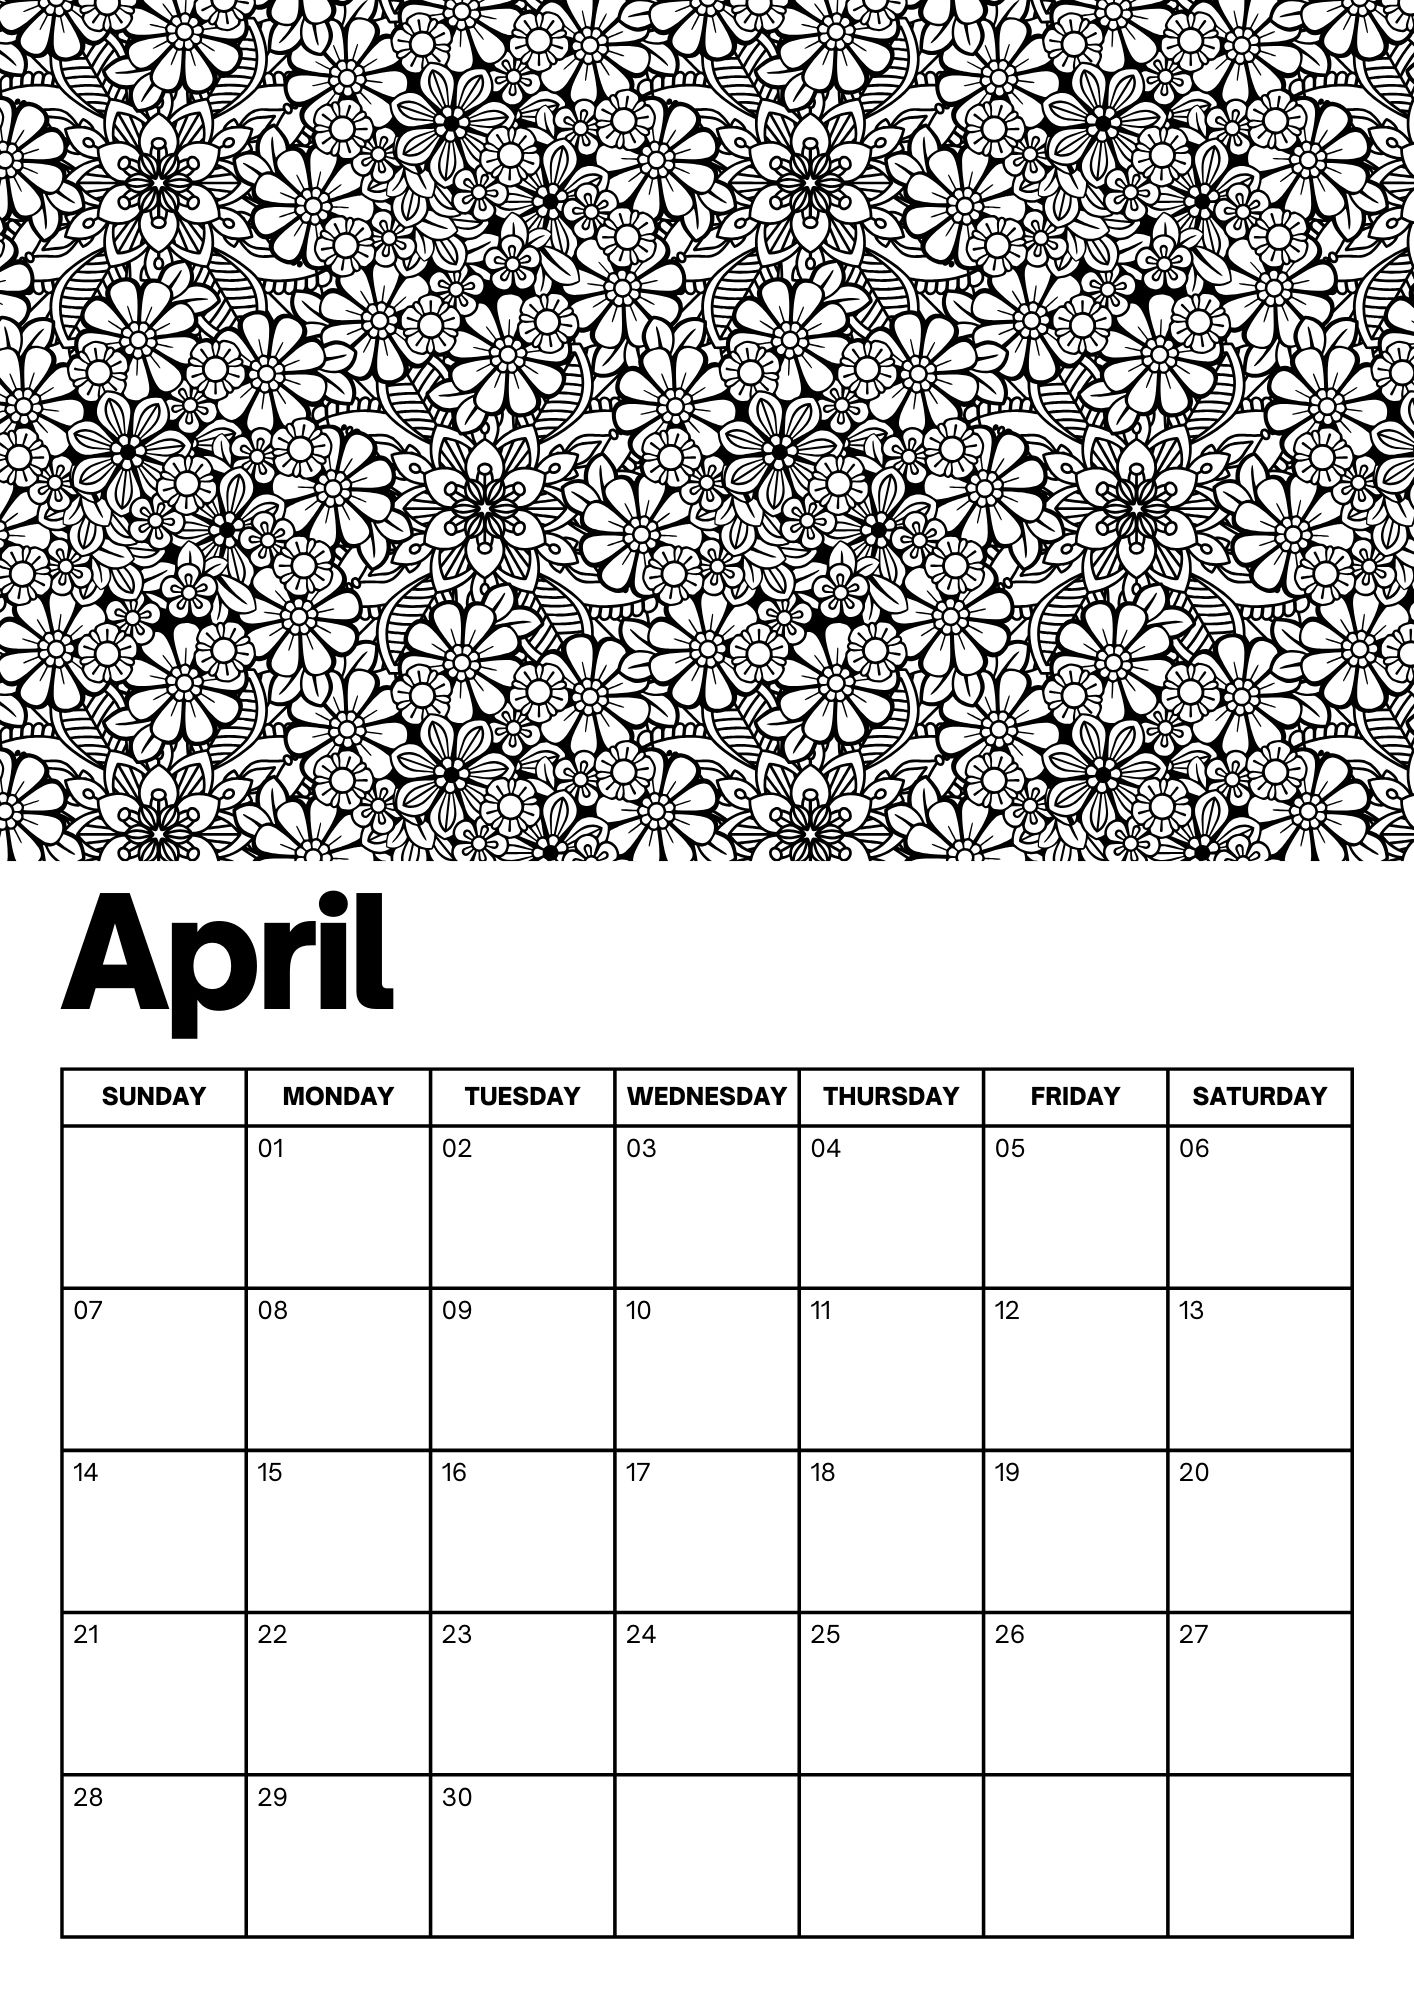 April Calendarss - 100% FREE PRINTABLES